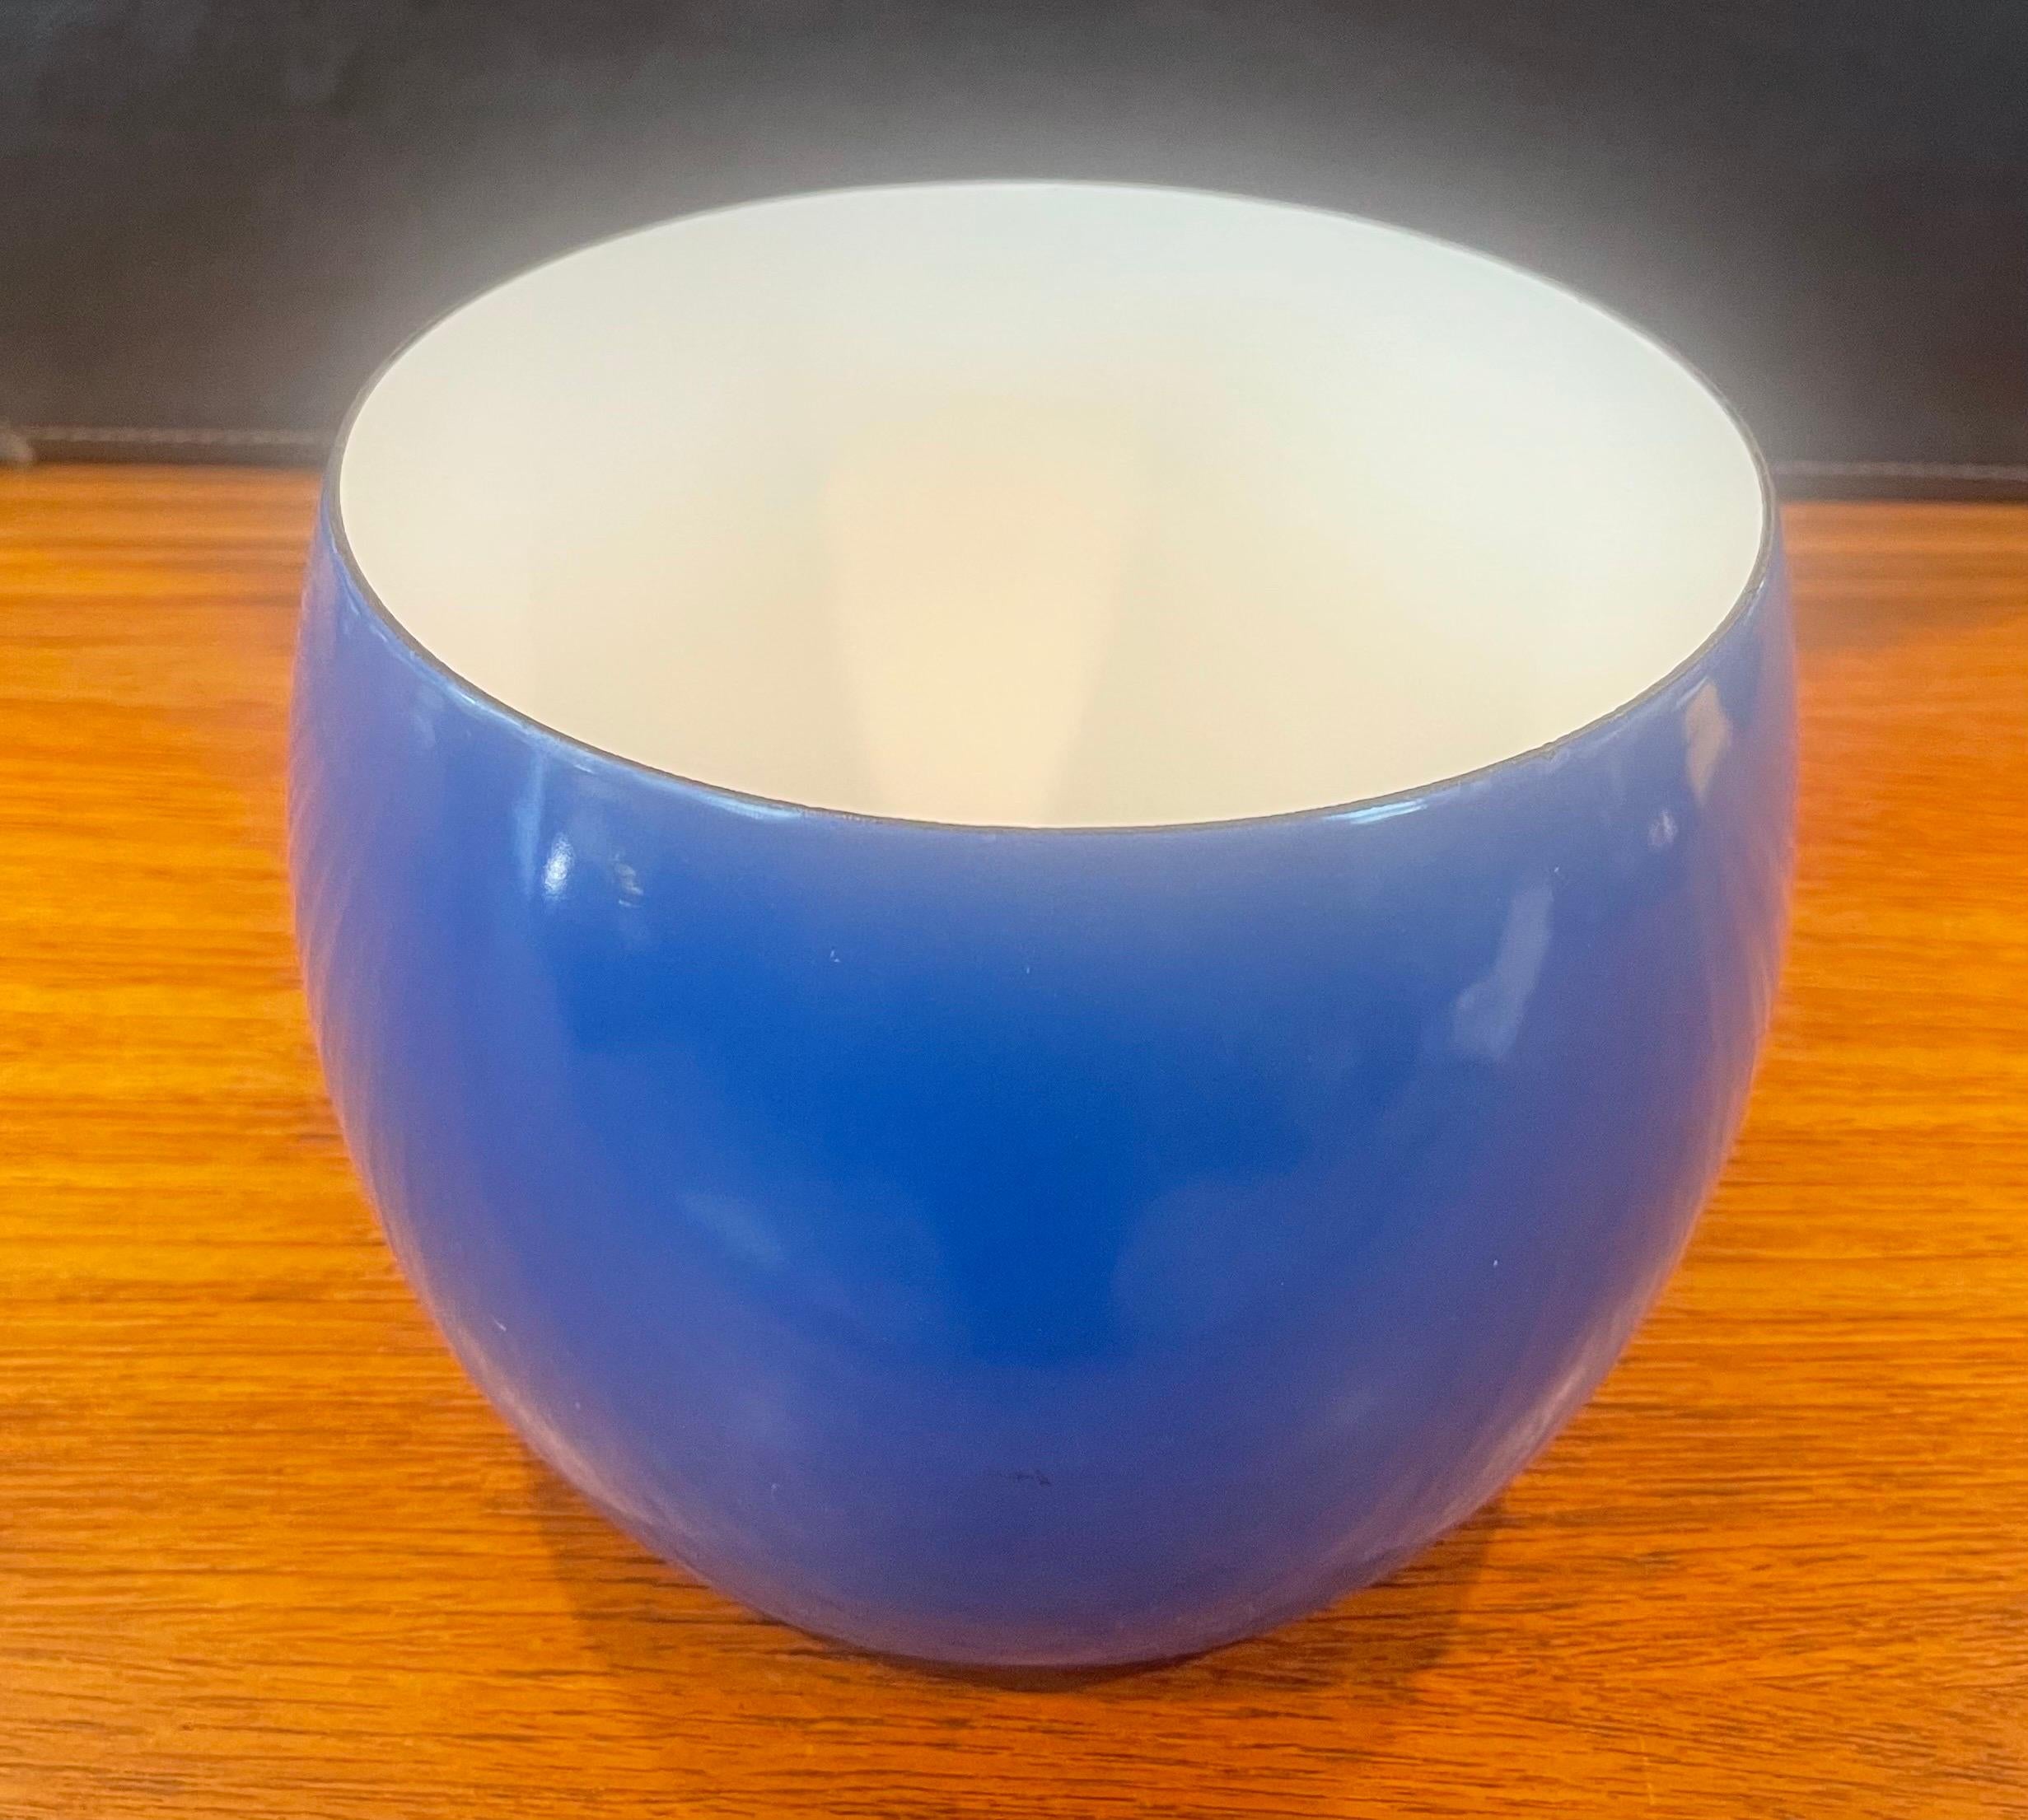 Pair of Danish Modern Blue & White Enamel Bowl by Jens Quistgaard for Dansk For Sale 1